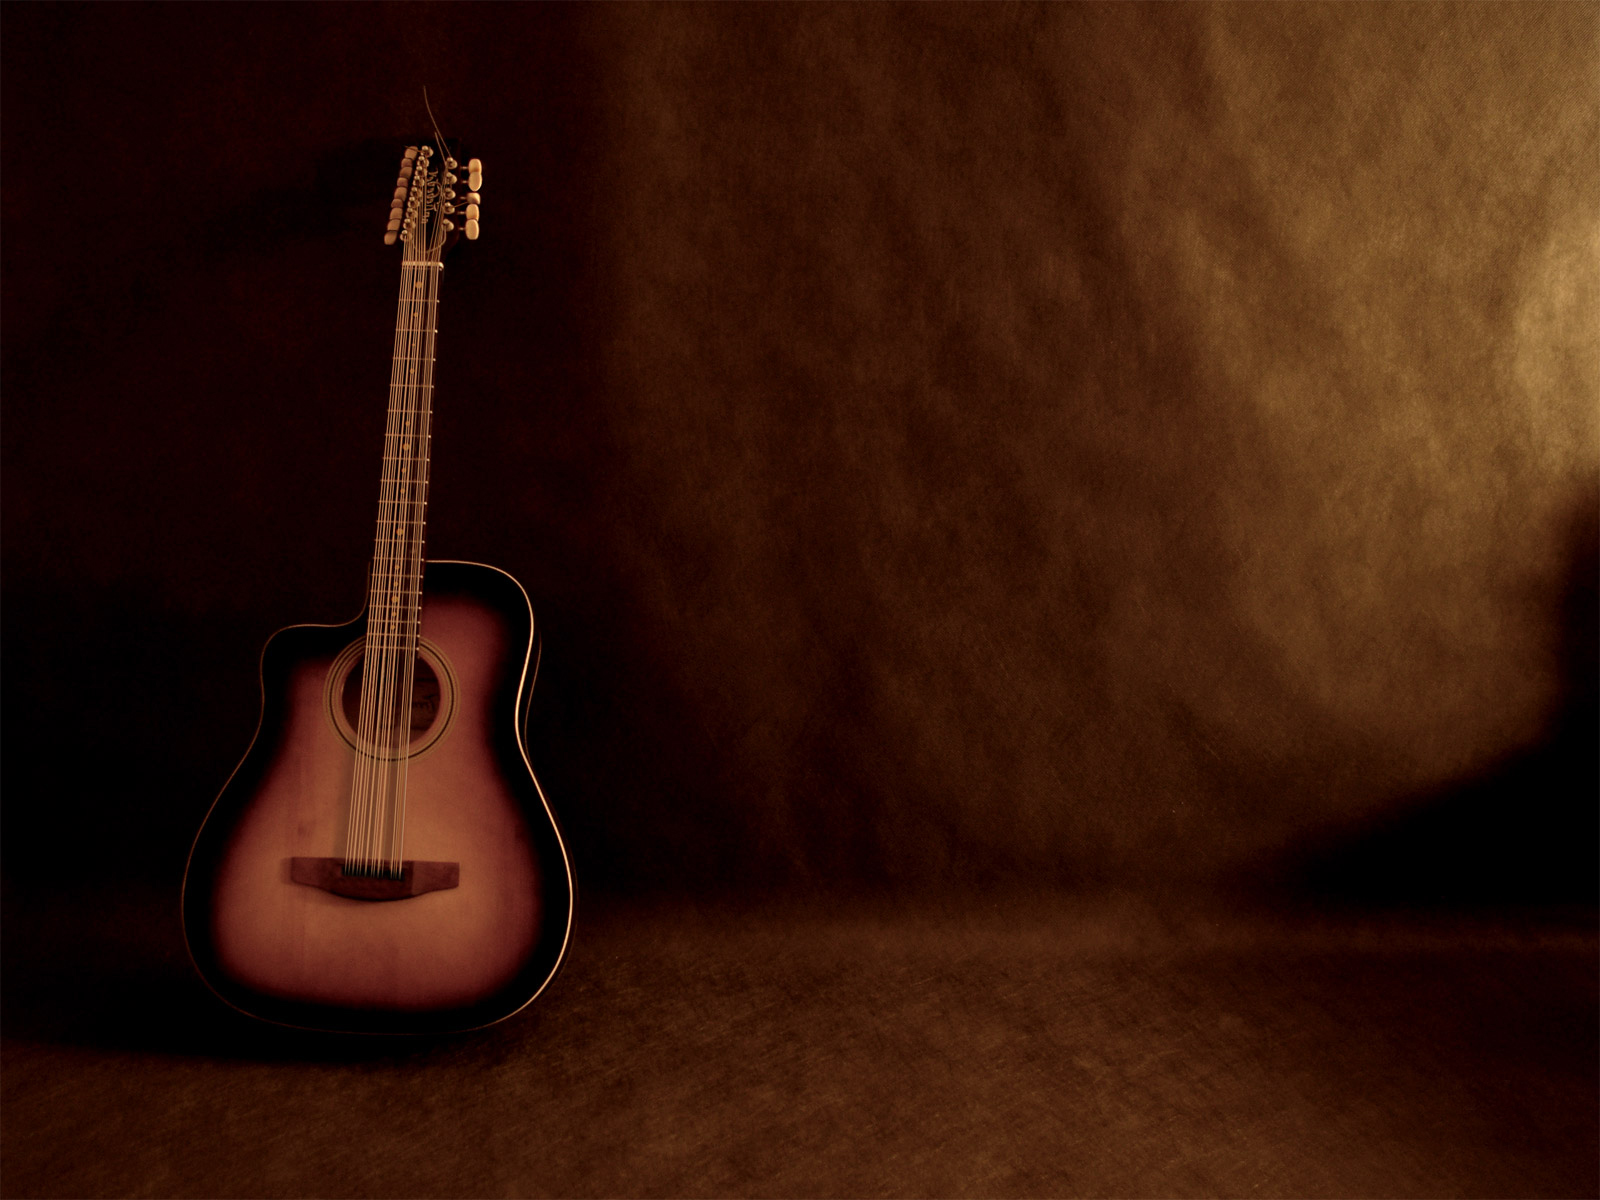 By Stephen Ments Off On Acoustic Guitar Wallpaper For Desktop